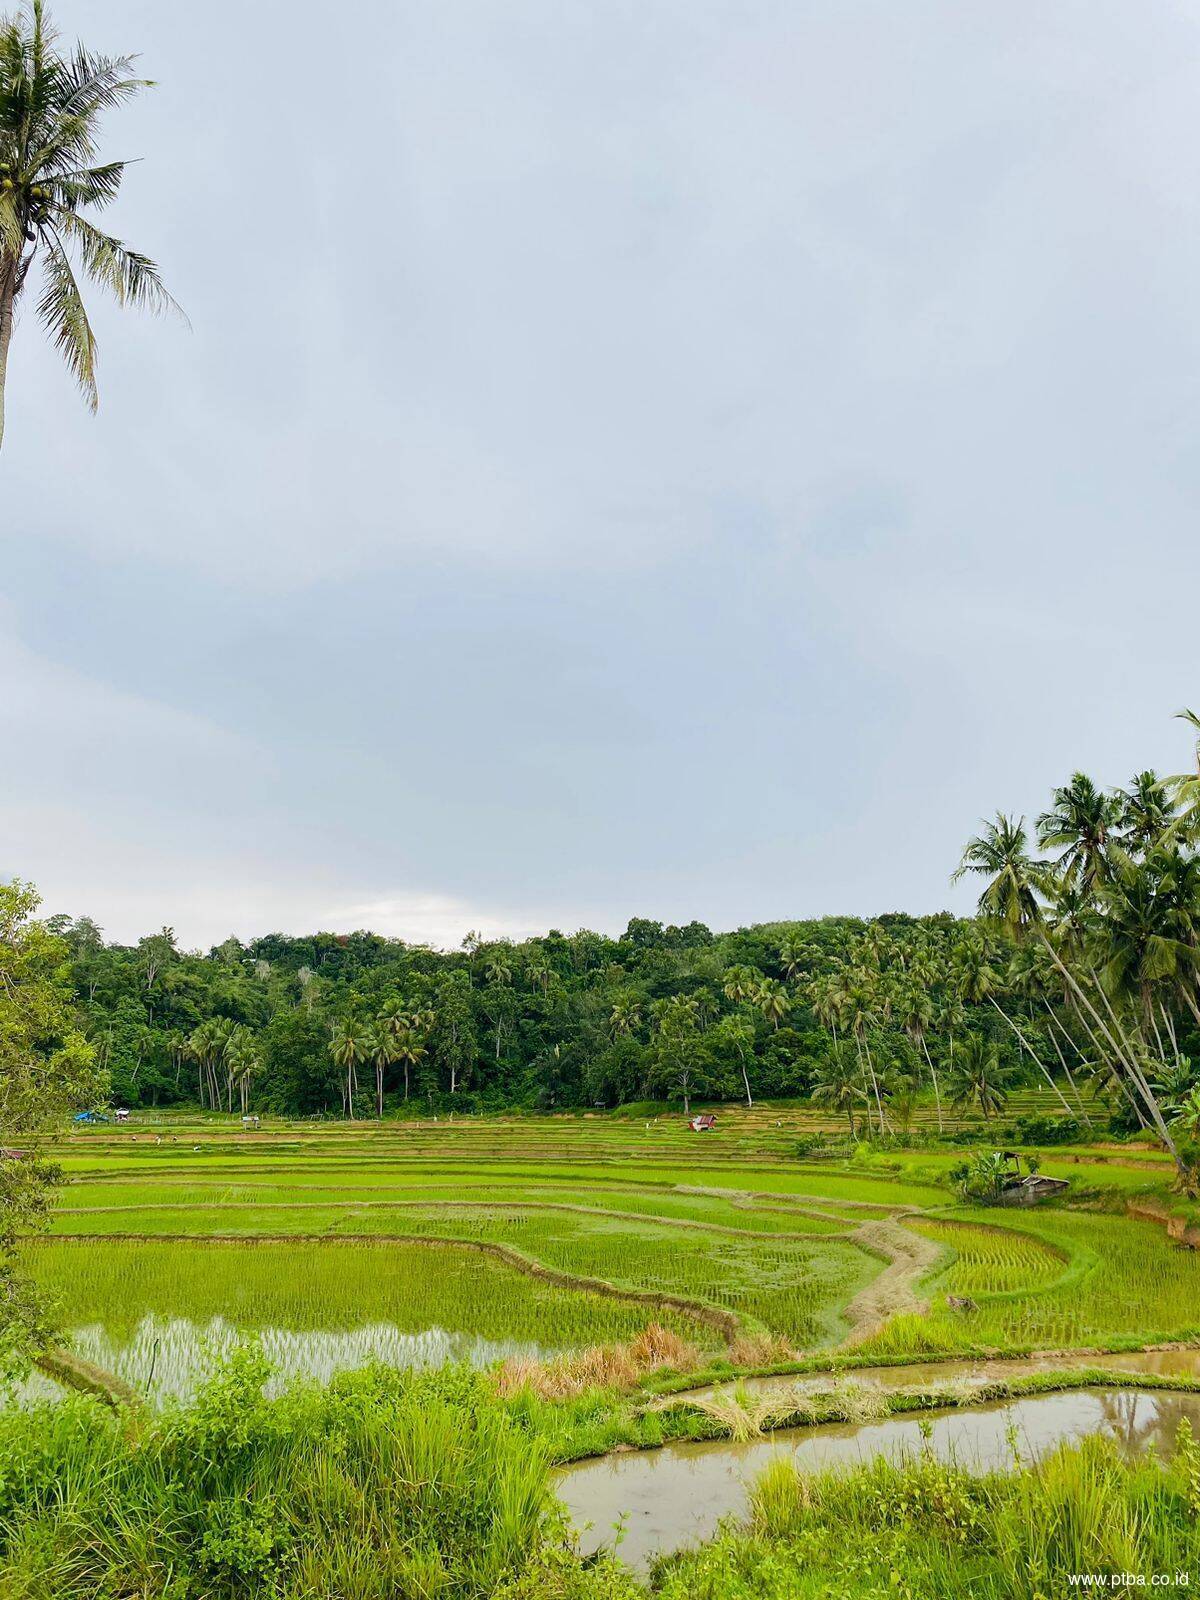 Energi Surya Bukit Asam (PTBA) Tingkatkan Panen Petani di Sawahlunto